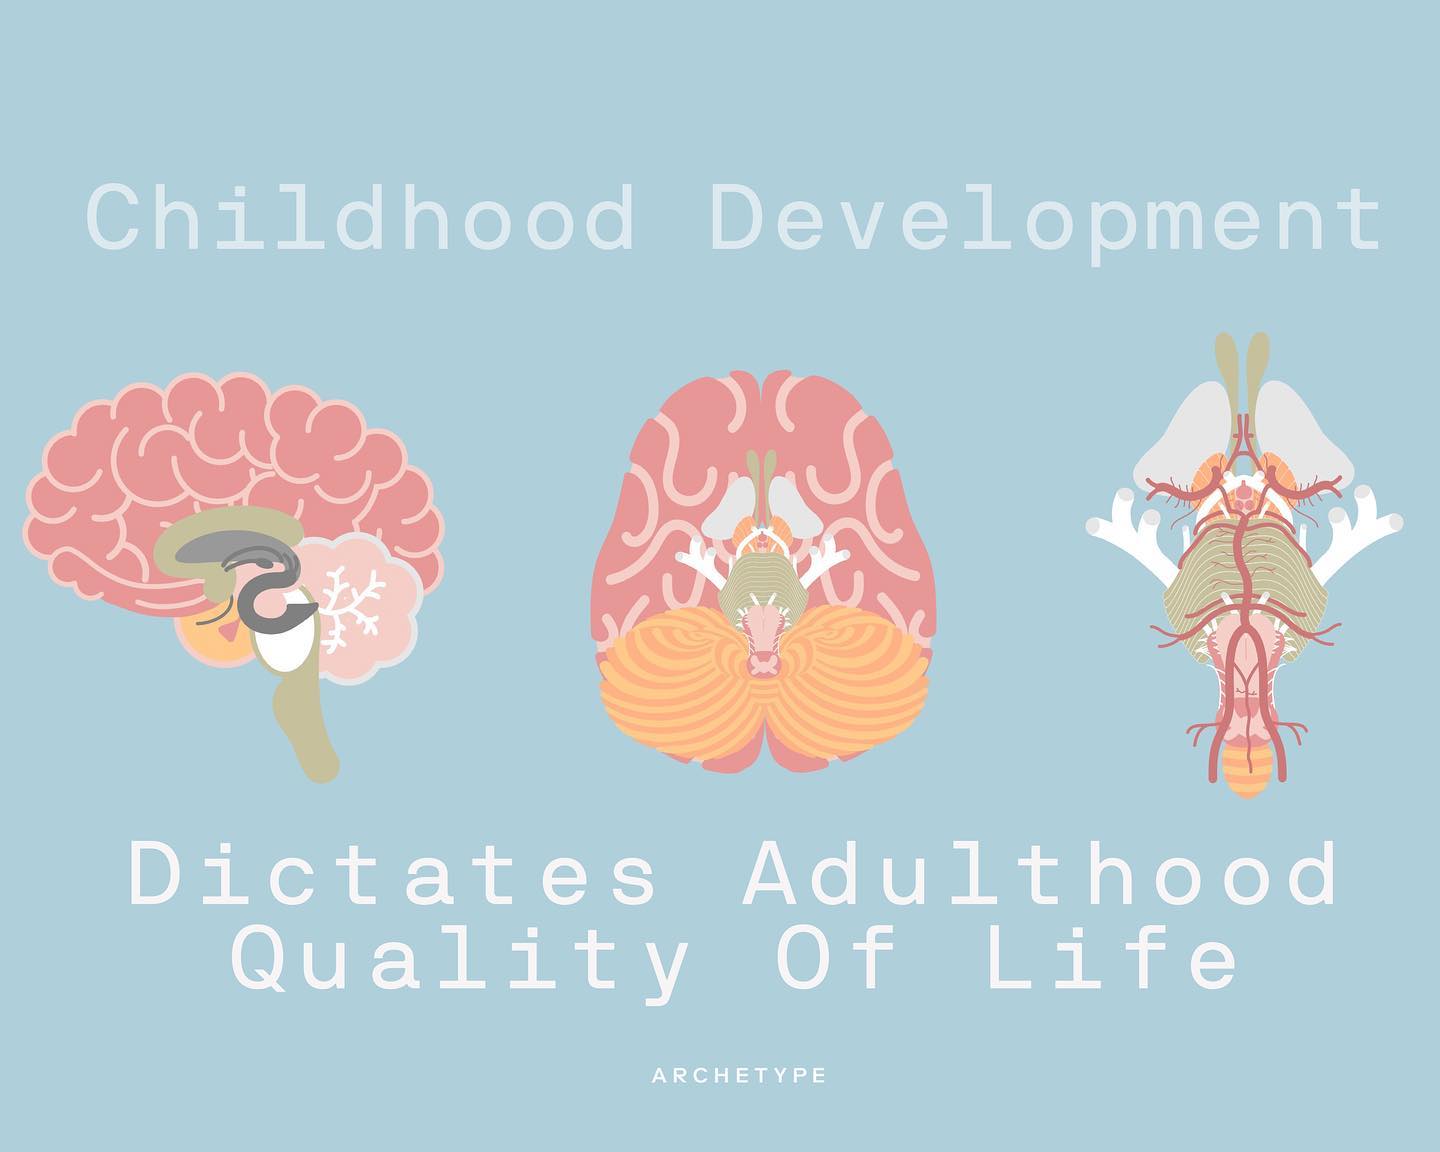 Childhood Development Dictates Adulthood Quality of Life